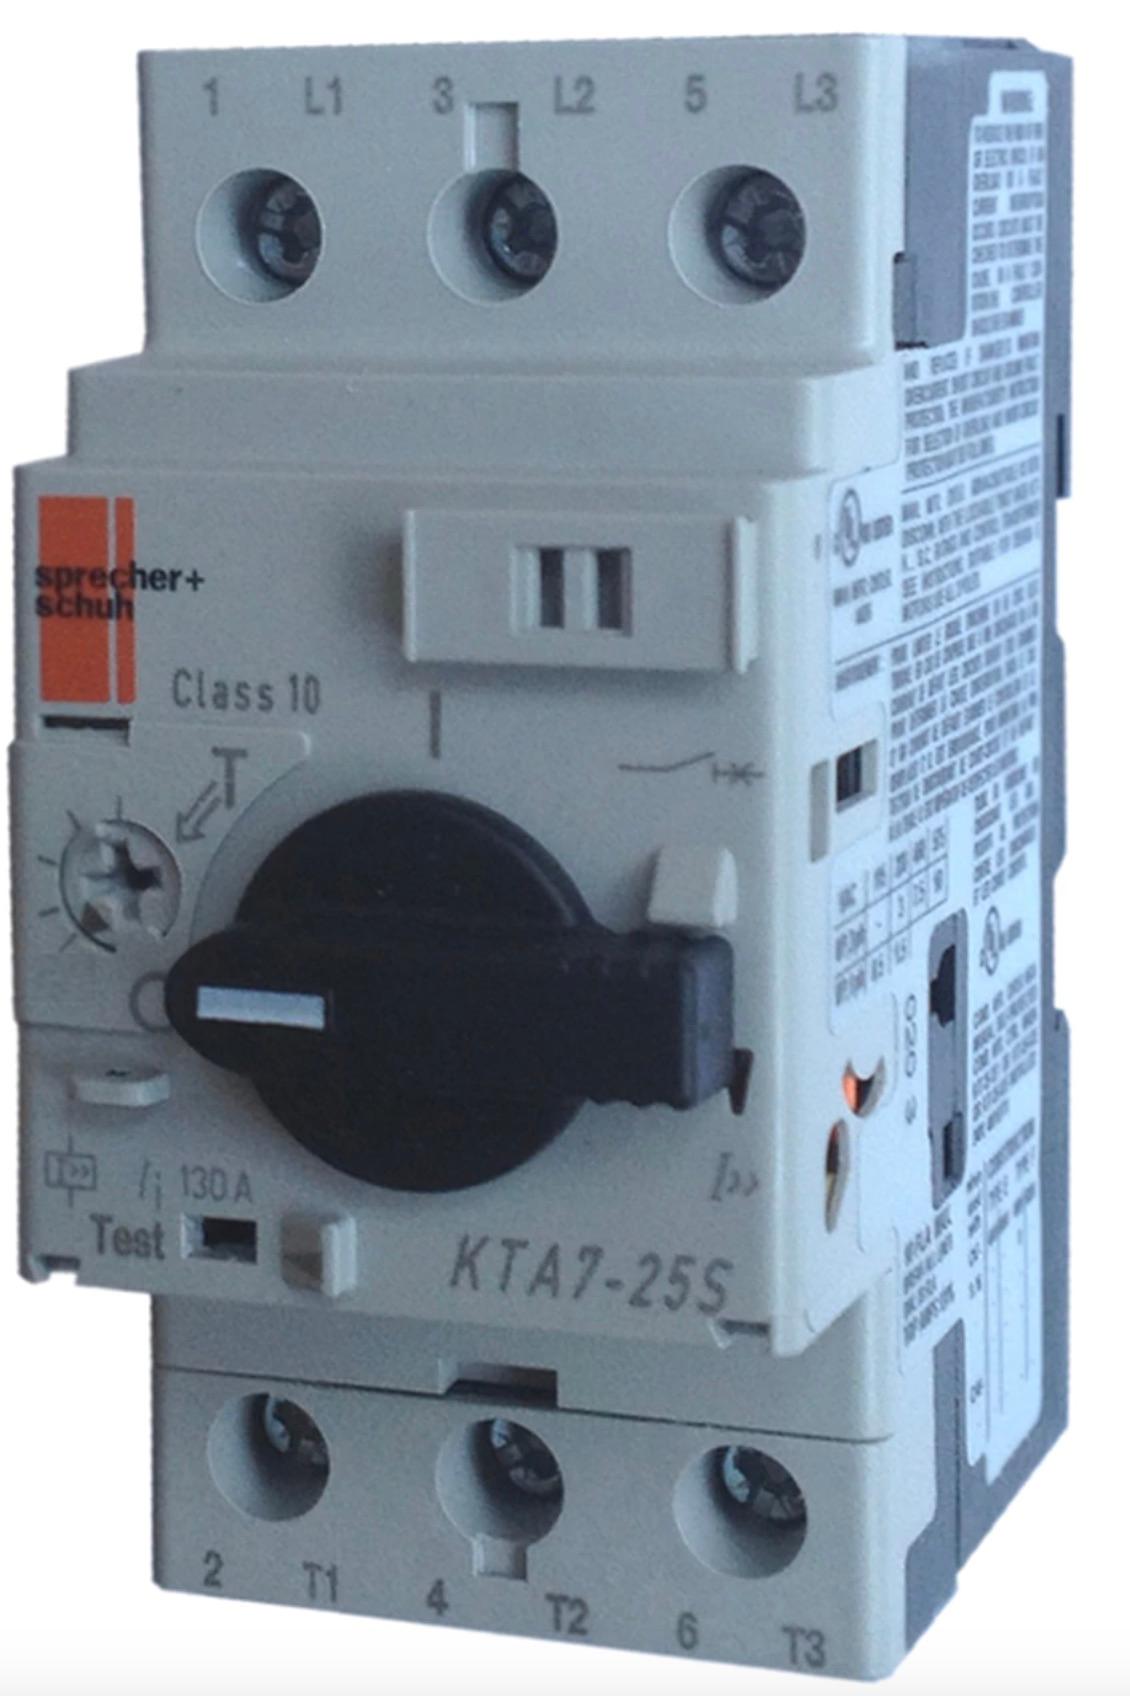 Sprecher + Schuh KTA7-25S-0.16A Manual motor controller, 2.1 Amps, 0.10...0.16 A Current Adjustment Range , Standard Interrupting Capacity